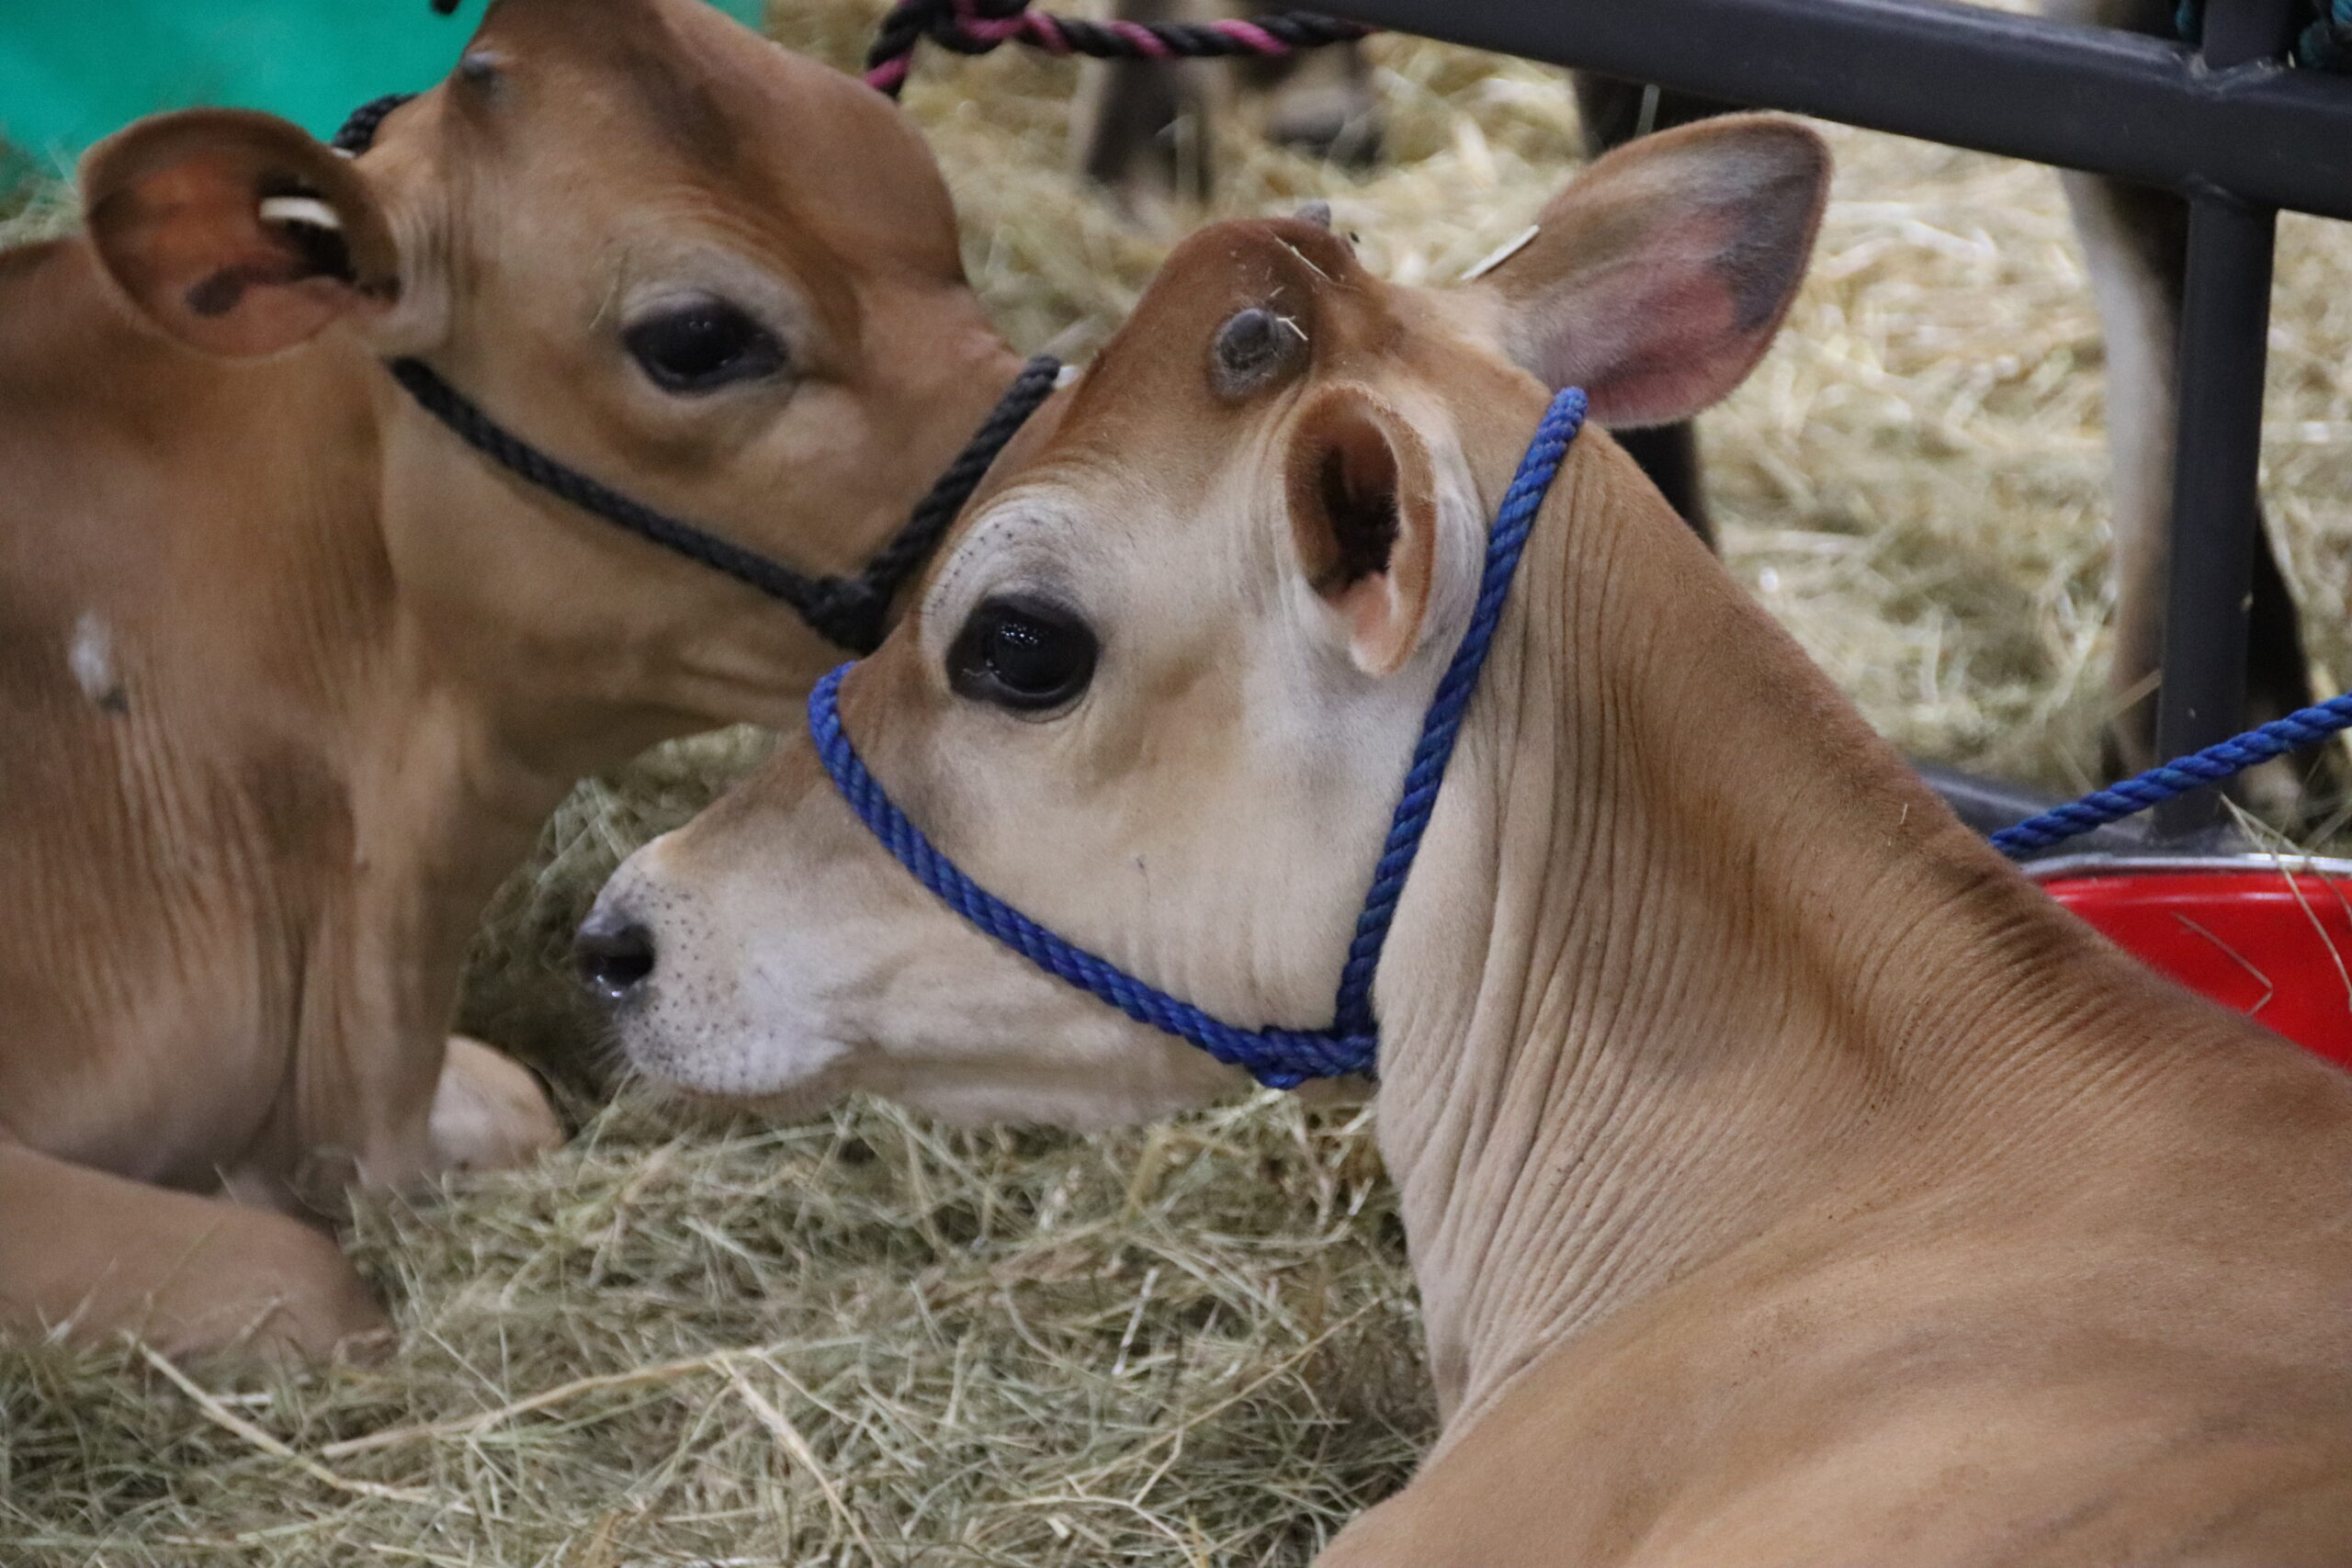 How did livestock breeds get domesticated? by Mario Villarino